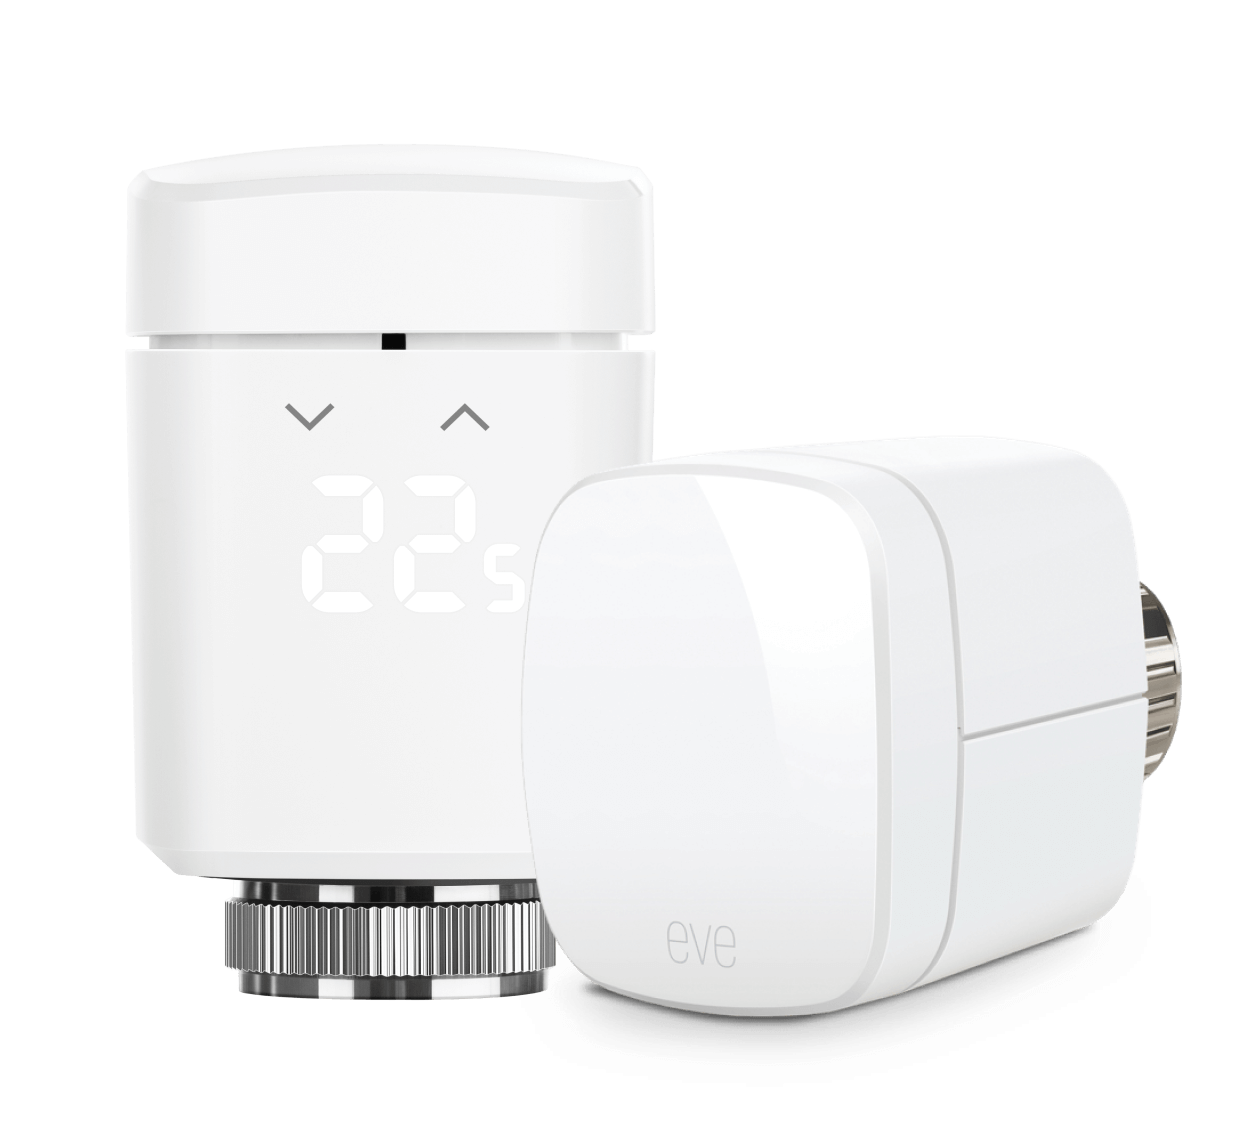 Meross HomeKit Smart Thermostat Valve Starter,WiFi Radiator Thermostat  Add-on,Work with Siri, Alexa,Google Assistant,SmartThings